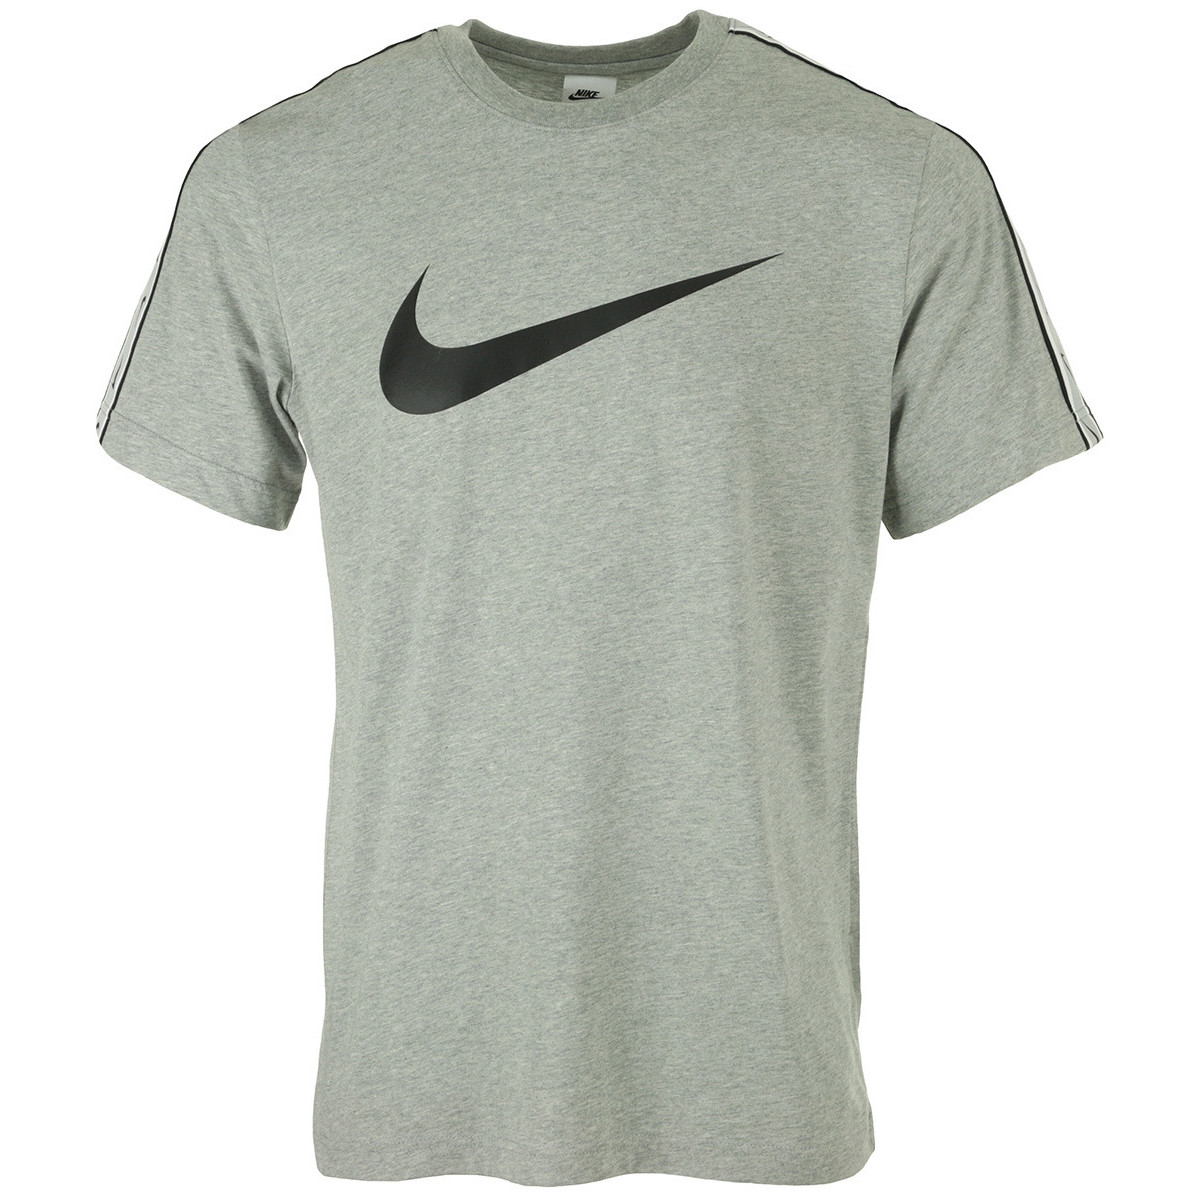 Kleidung Herren T-Shirts Nike Repeat Swoosh Tee shirt Grau